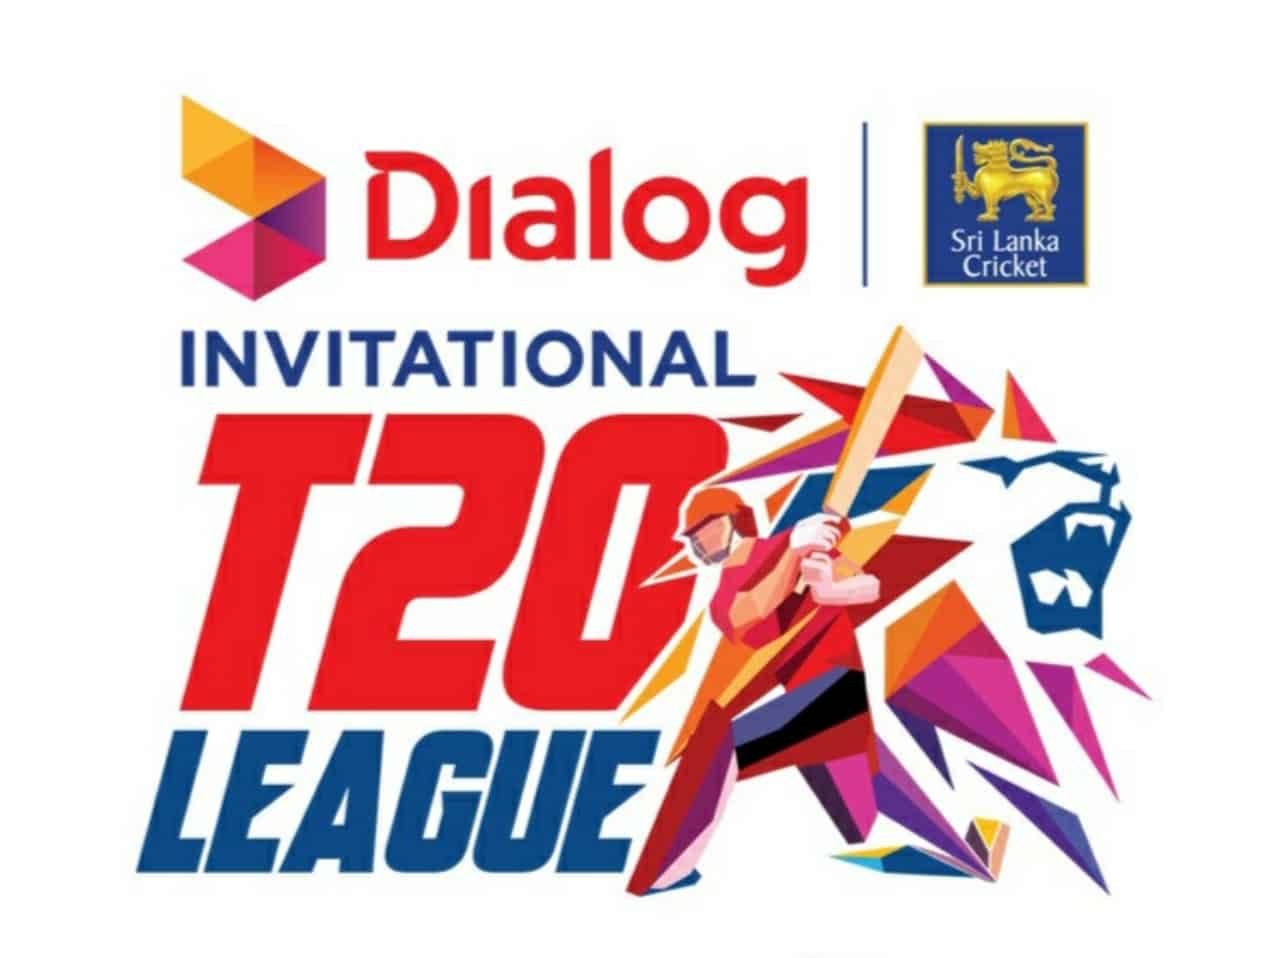 Sri Lanka Cricket Invitational T20 League Dream11 Prediction Fantasy Cricket Tips Dream11 Team